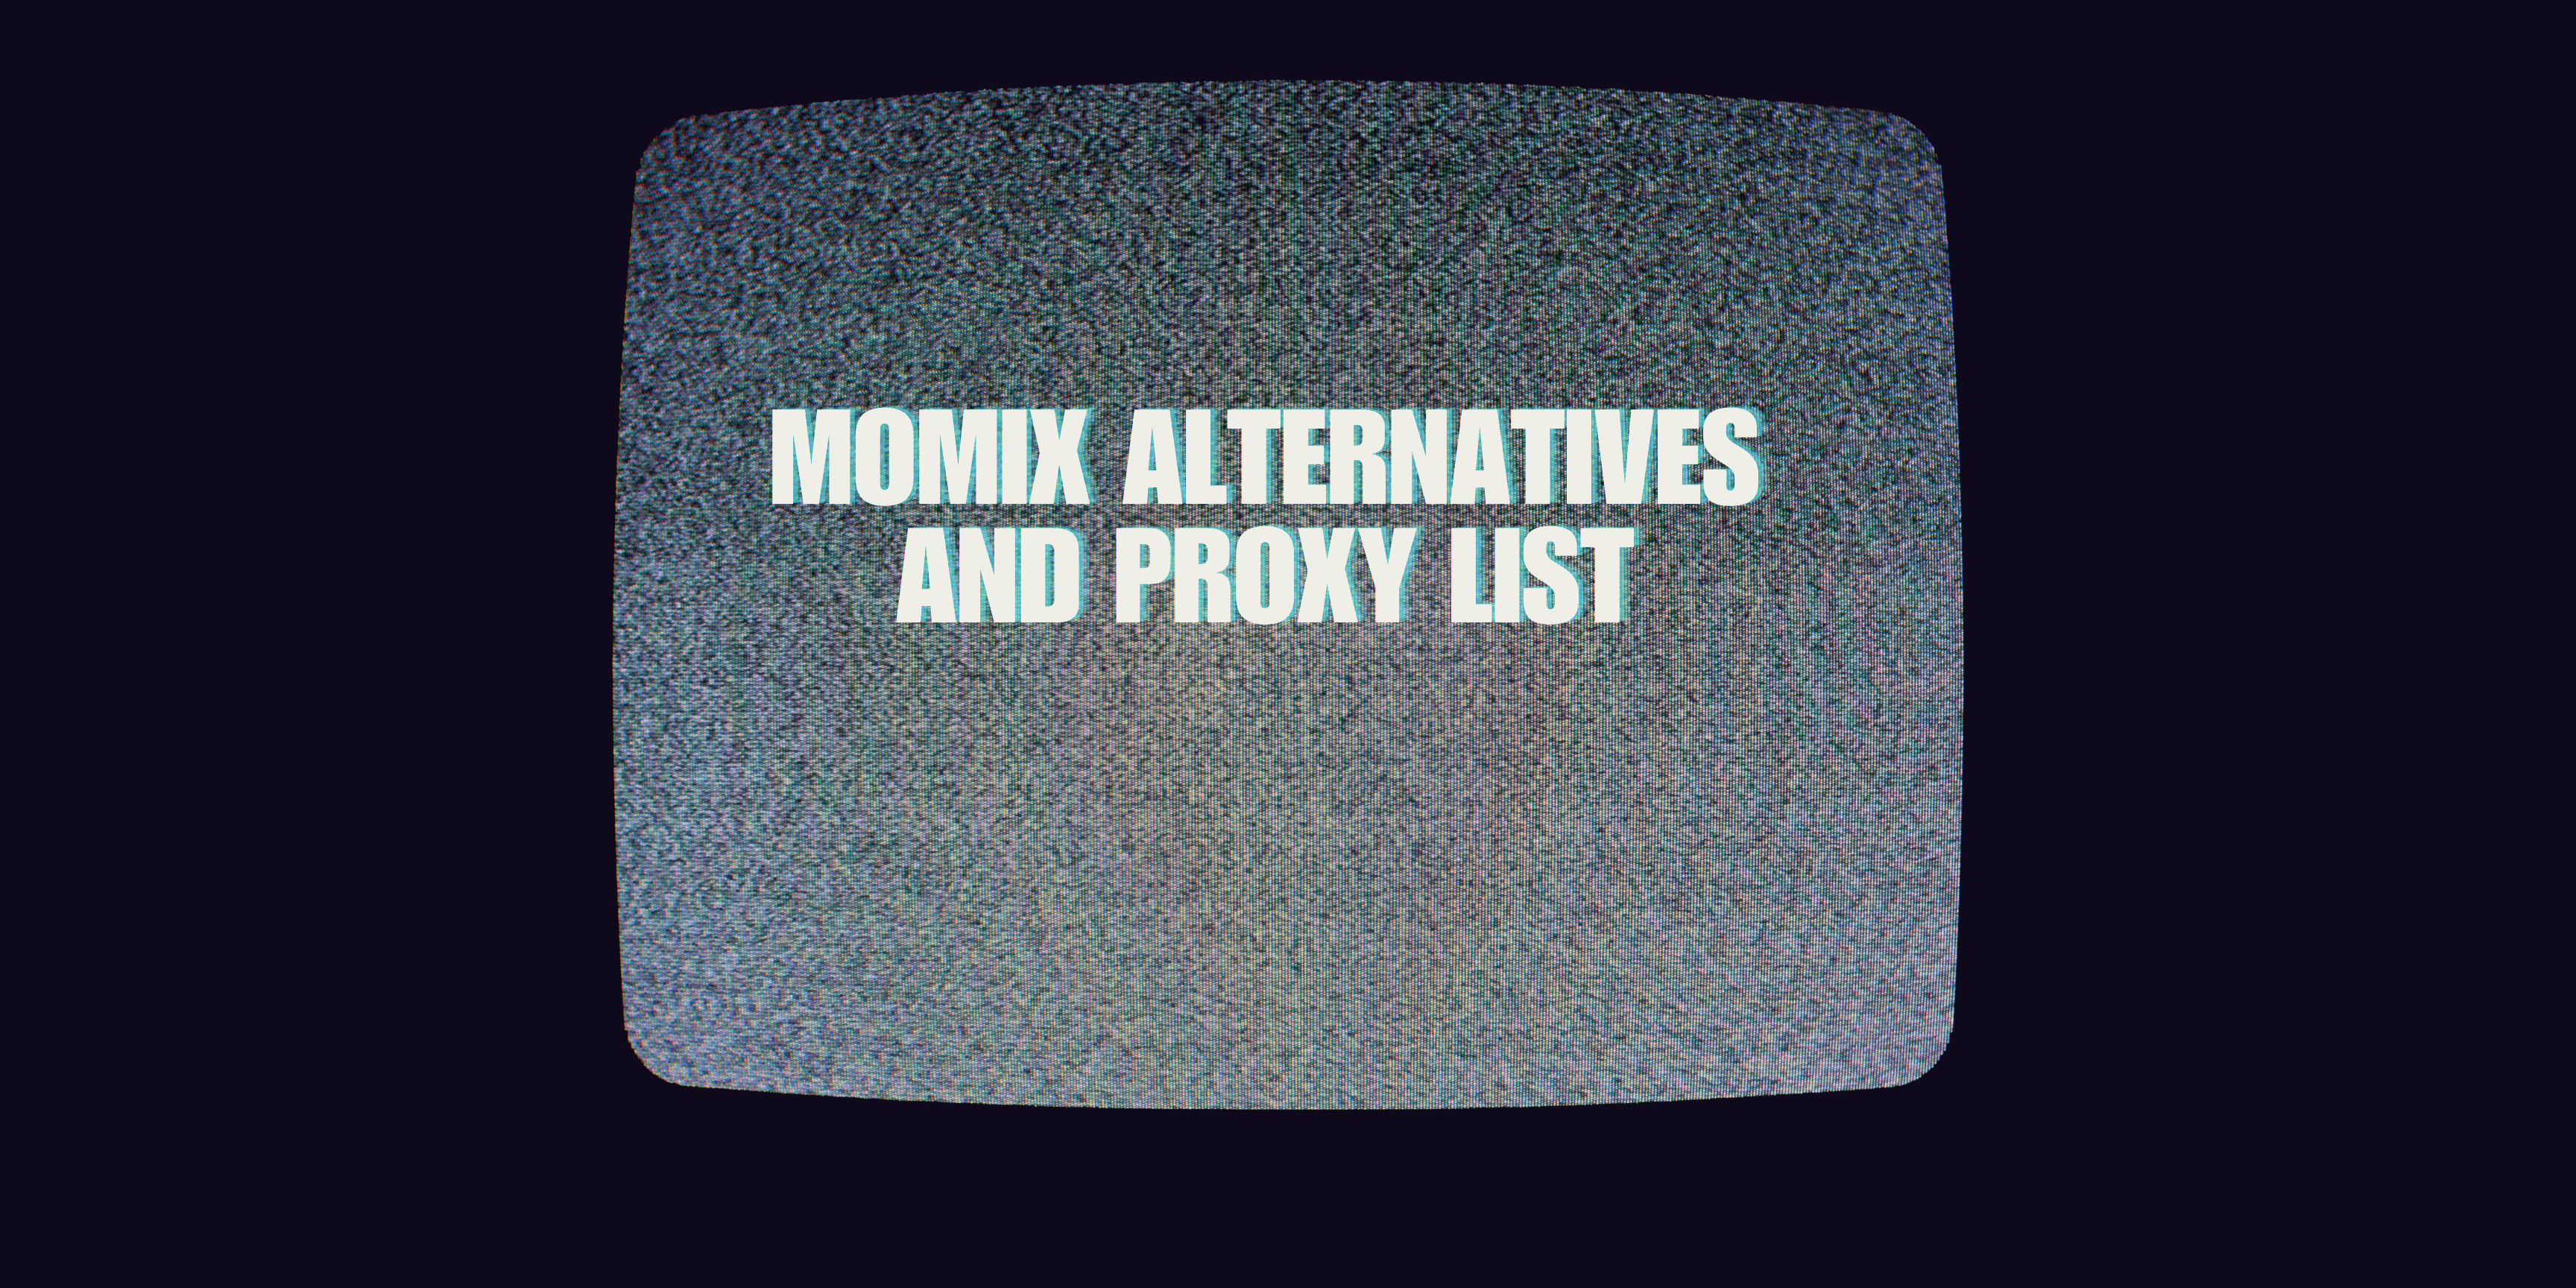 Momix alternatives and proxy list